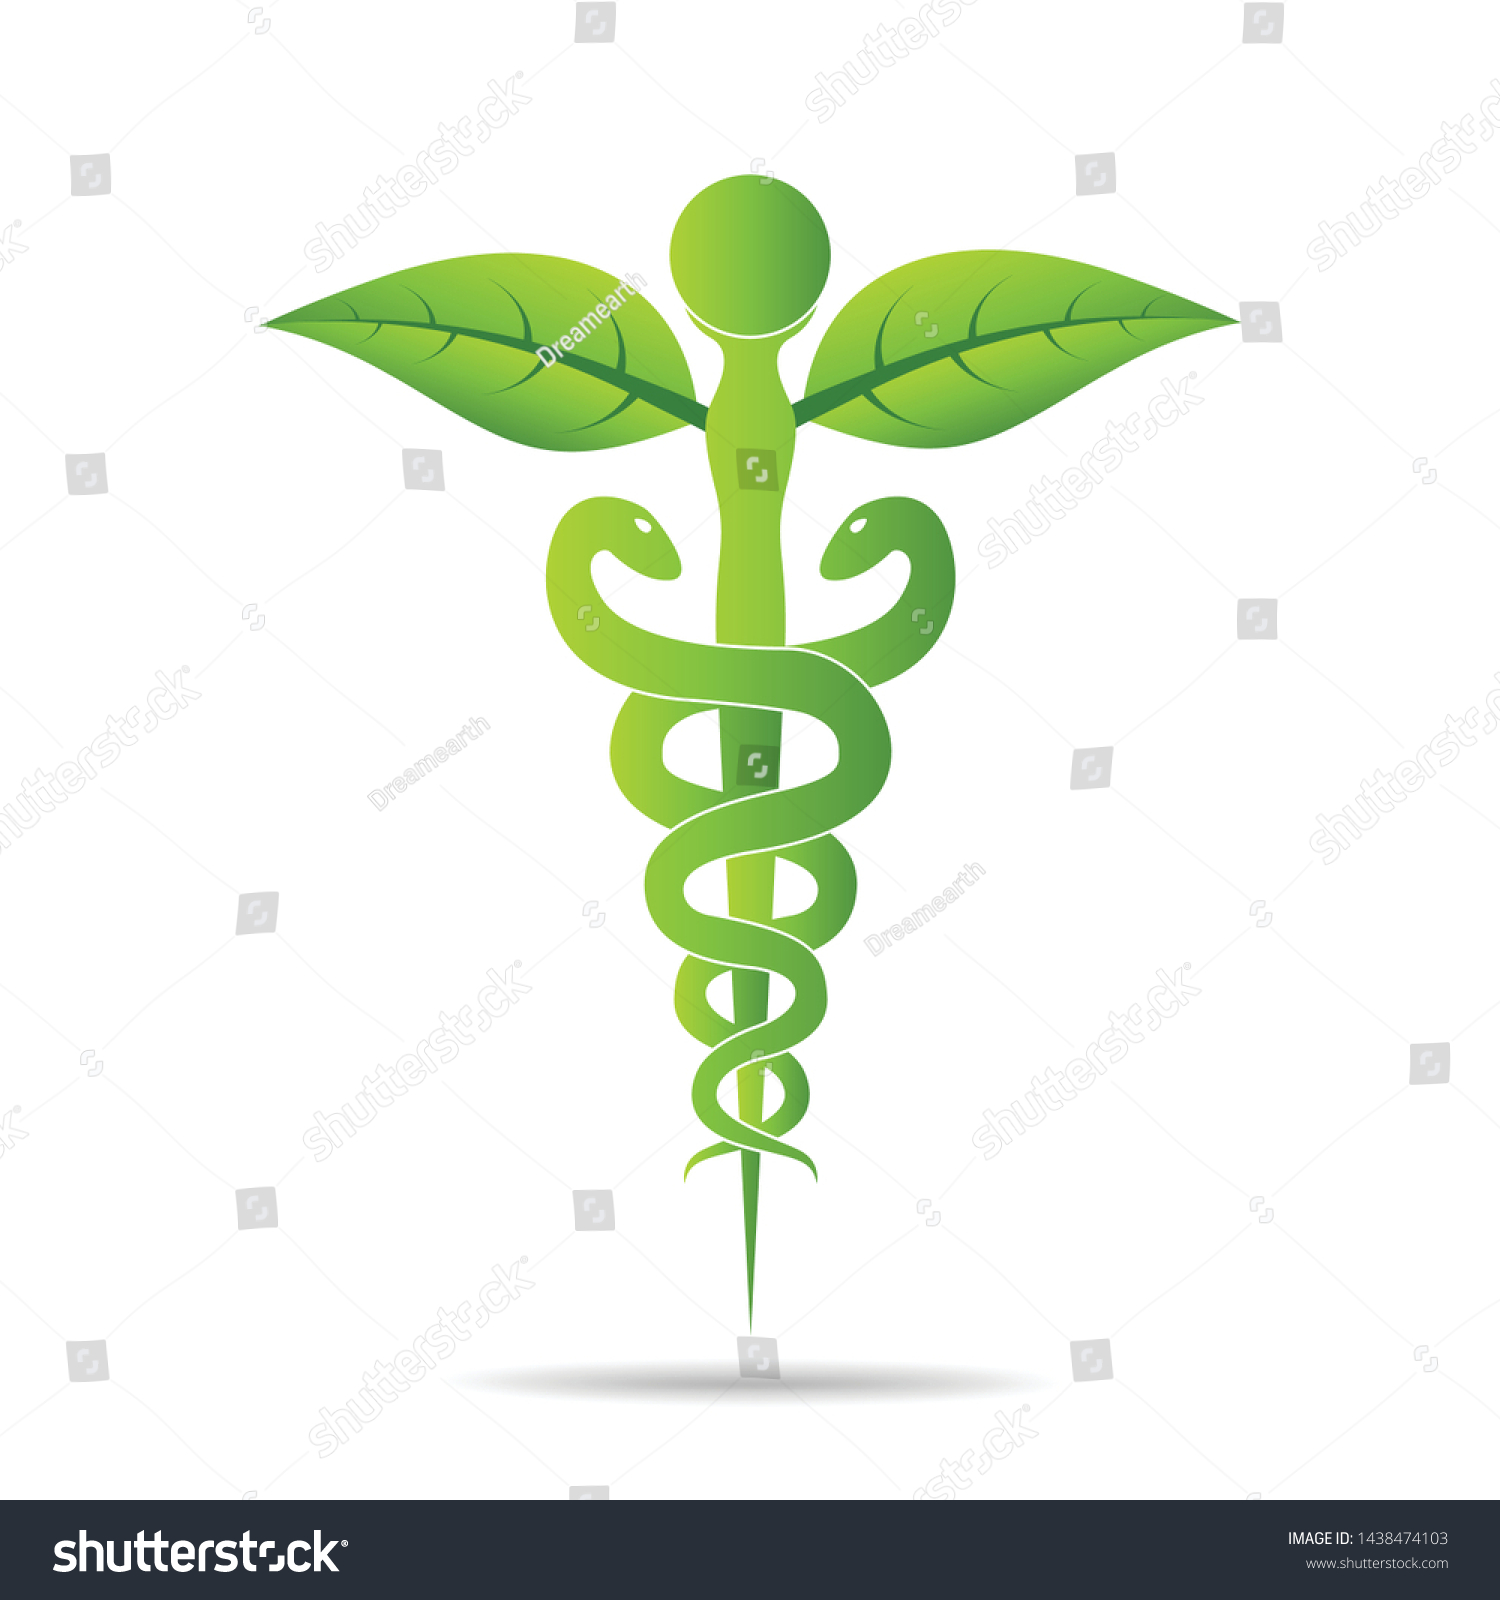 Medical Symbol Created Using Snakes Green Stock Vector (Royalty Free ...